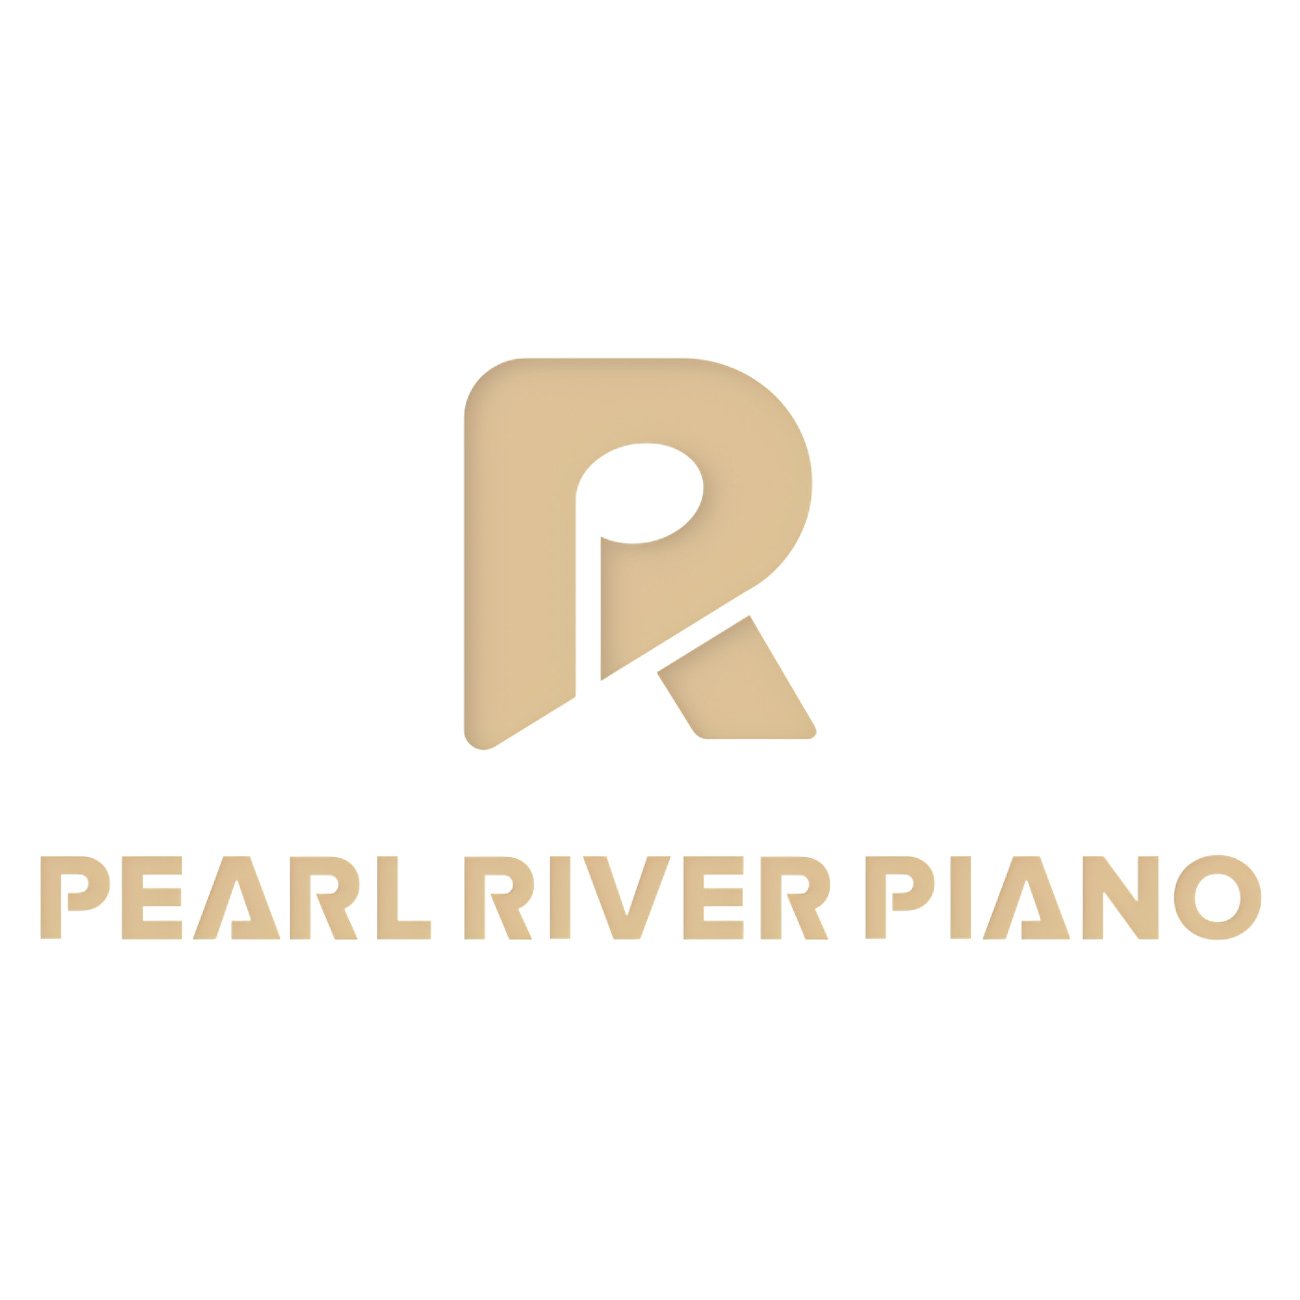 sq_pearl river logo.jpg